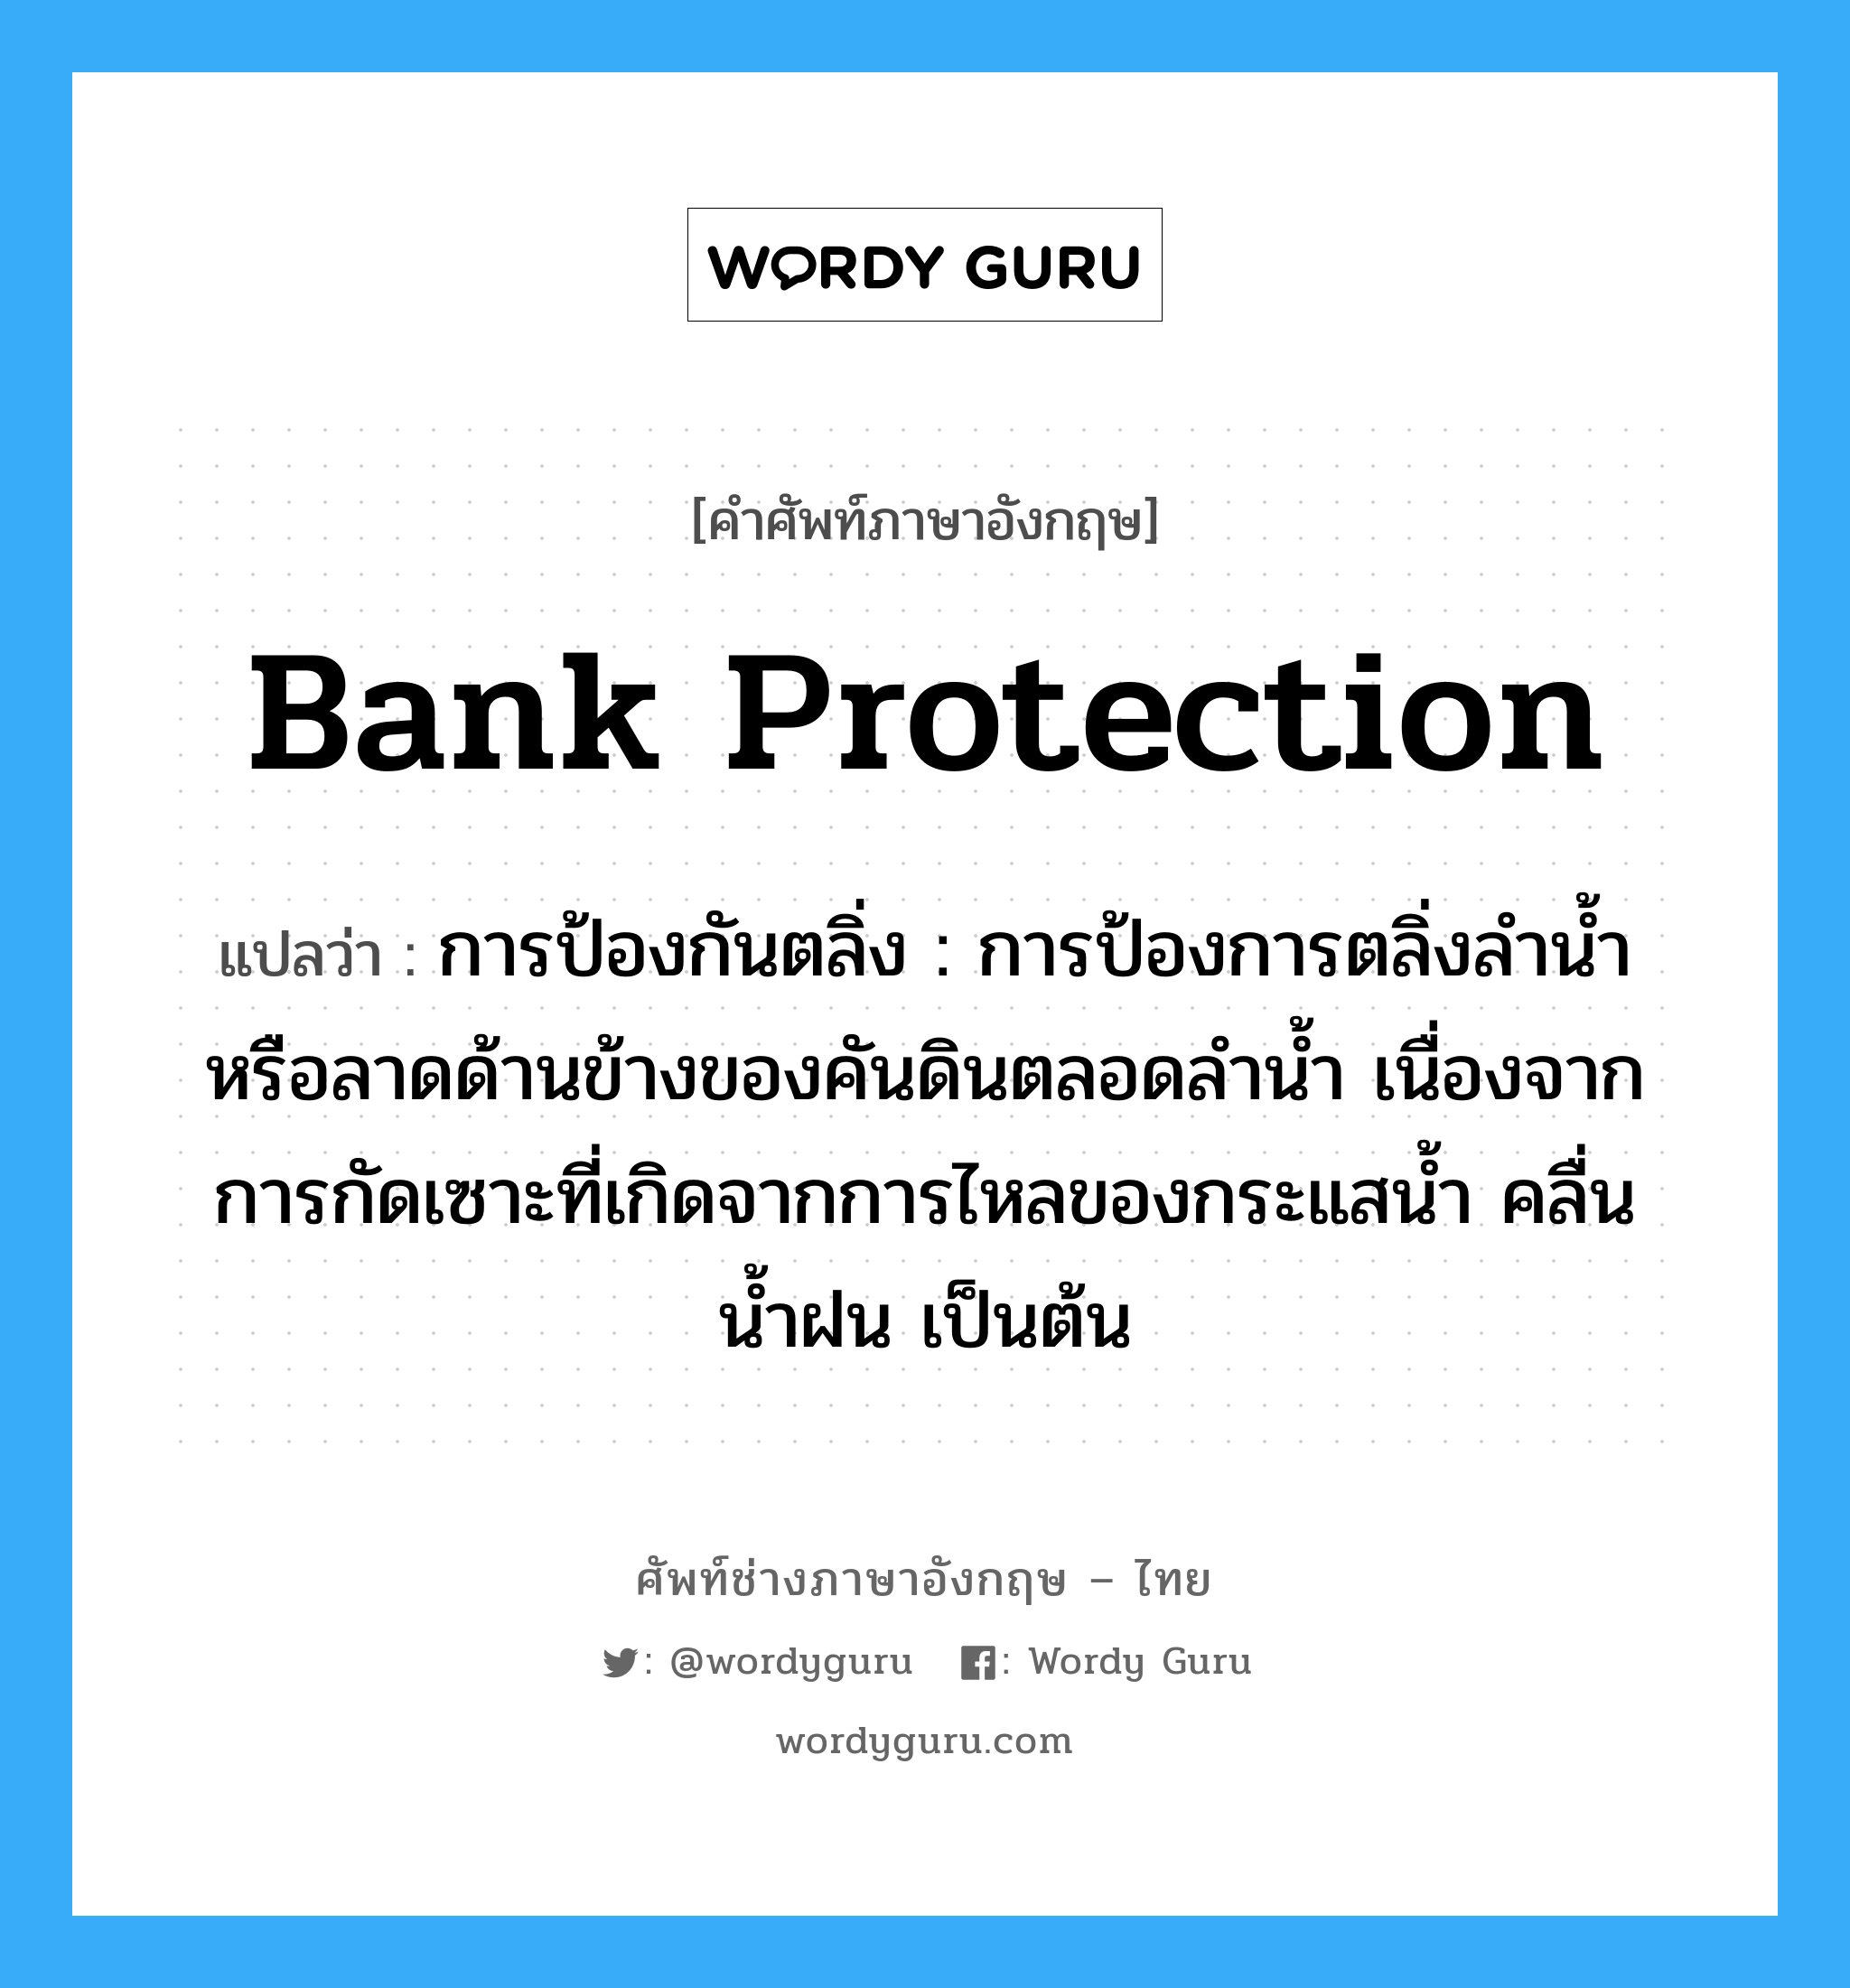 bank protection แปลว่า?, คำศัพท์ช่างภาษาอังกฤษ - ไทย bank protection คำศัพท์ภาษาอังกฤษ bank protection แปลว่า การป้องกันตลิ่ง : การป้องการตลิ่งลำน้ำหรือลาดด้านข้างของคันดินตลอดลำน้ำ เนื่องจากการกัดเซาะที่เกิดจากการไหลของกระแสน้ำ คลื่น น้ำฝน เป็นต้น